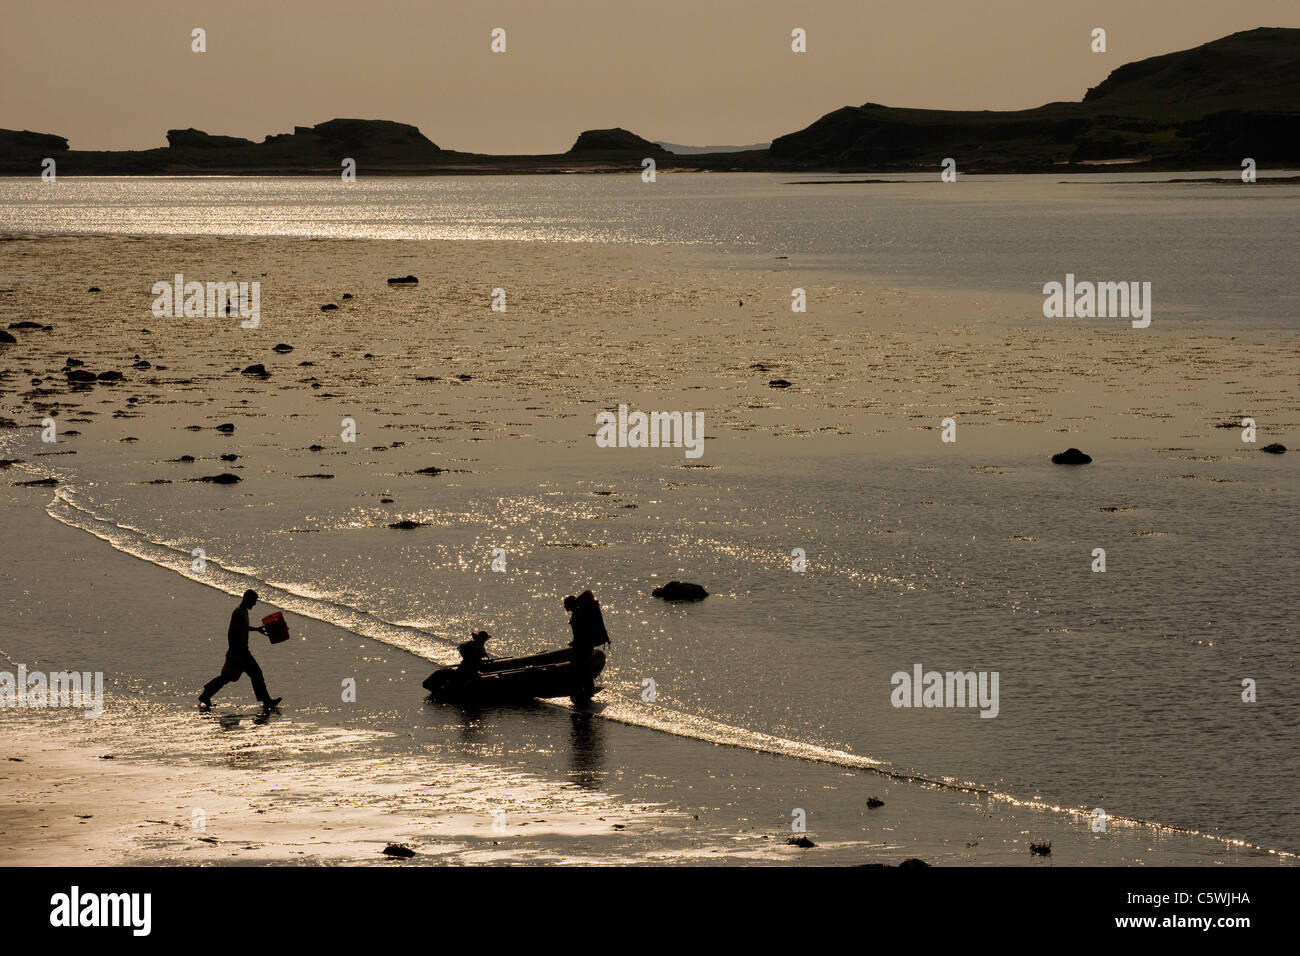 Family on beach launching small boat, Isle of Mull, Scotland, Great Britain. Stock Photo